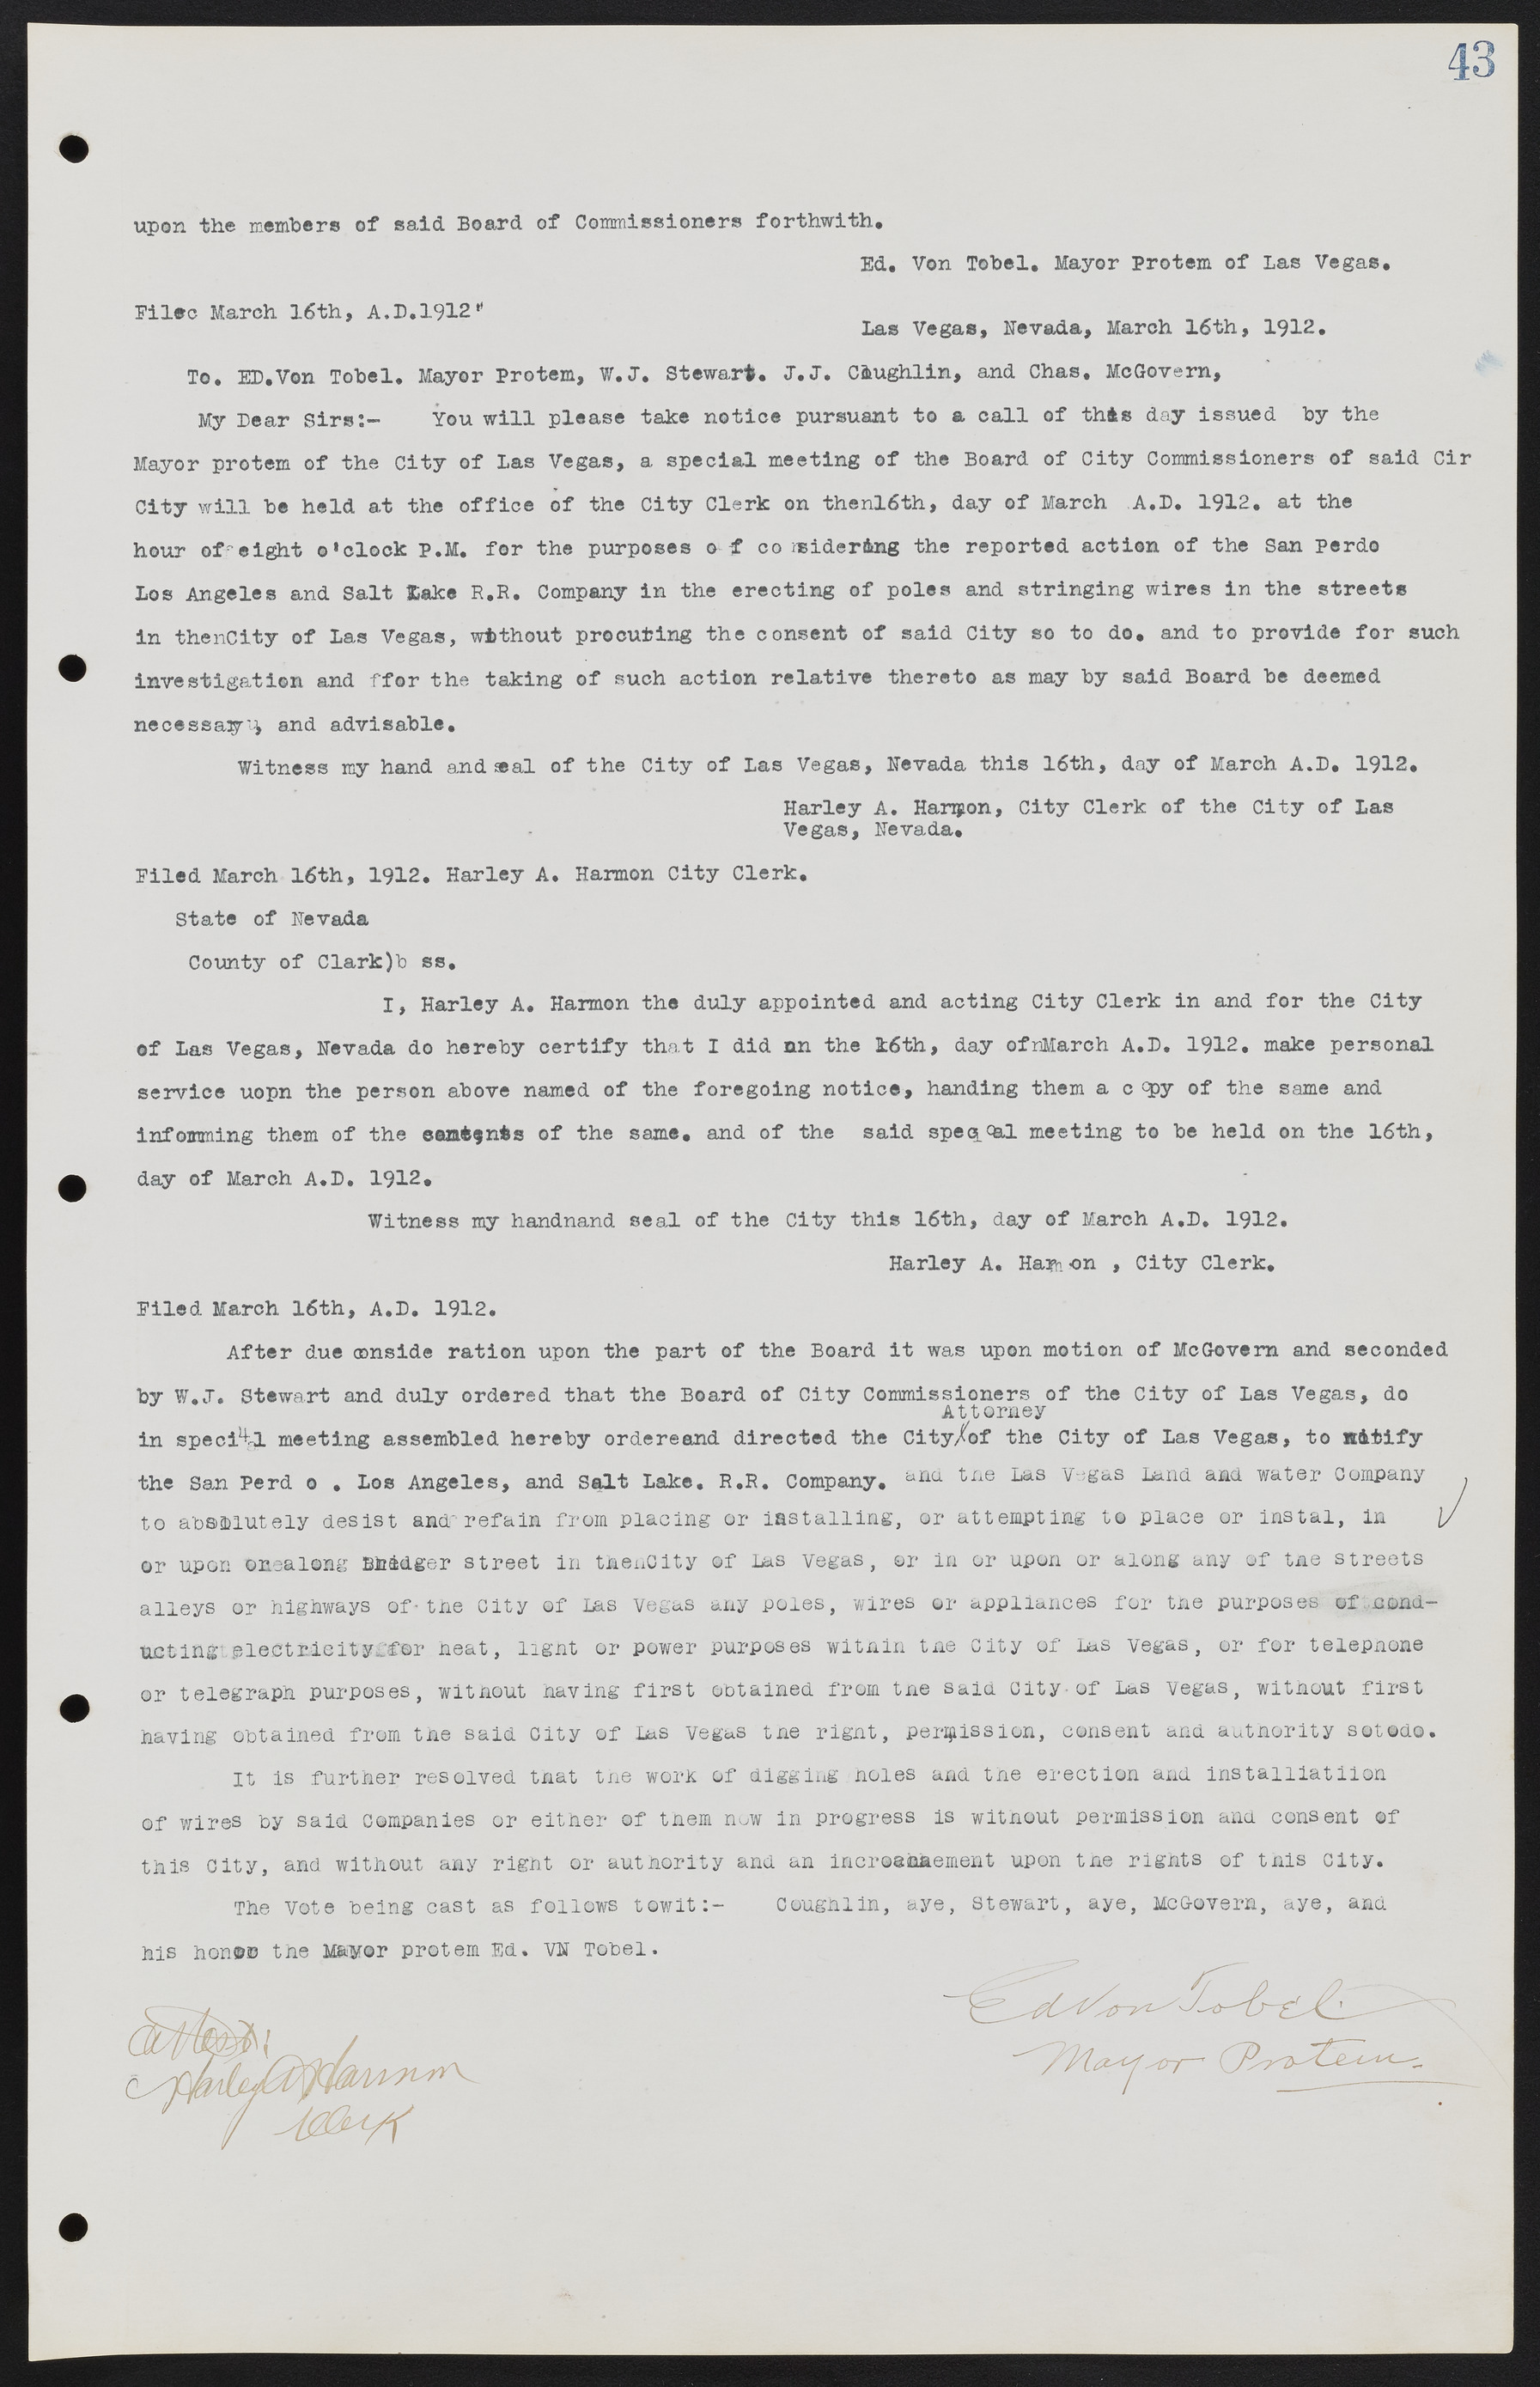 Las Vegas City Commission Minutes, June 22, 1911 to February 7, 1922, lvc000001-57